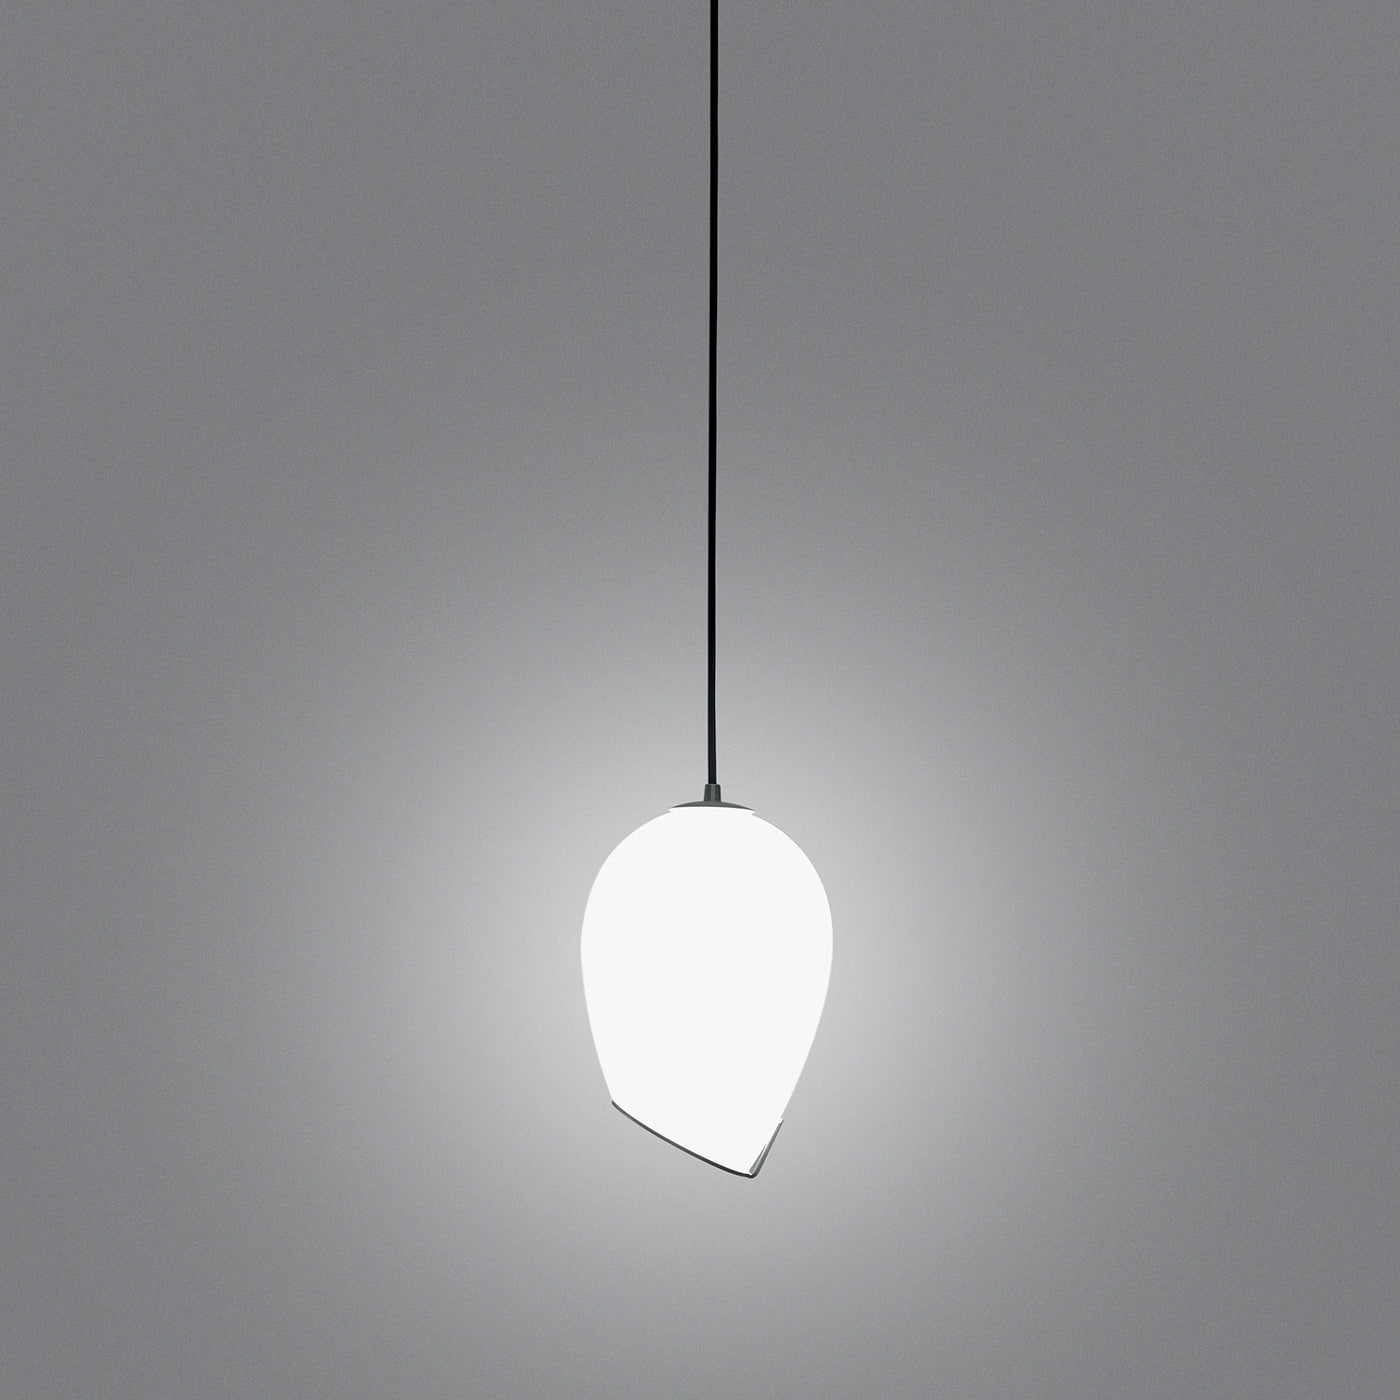 Equilibrio Pendant Lamp by Michele De Lucchi - Alternative view 4